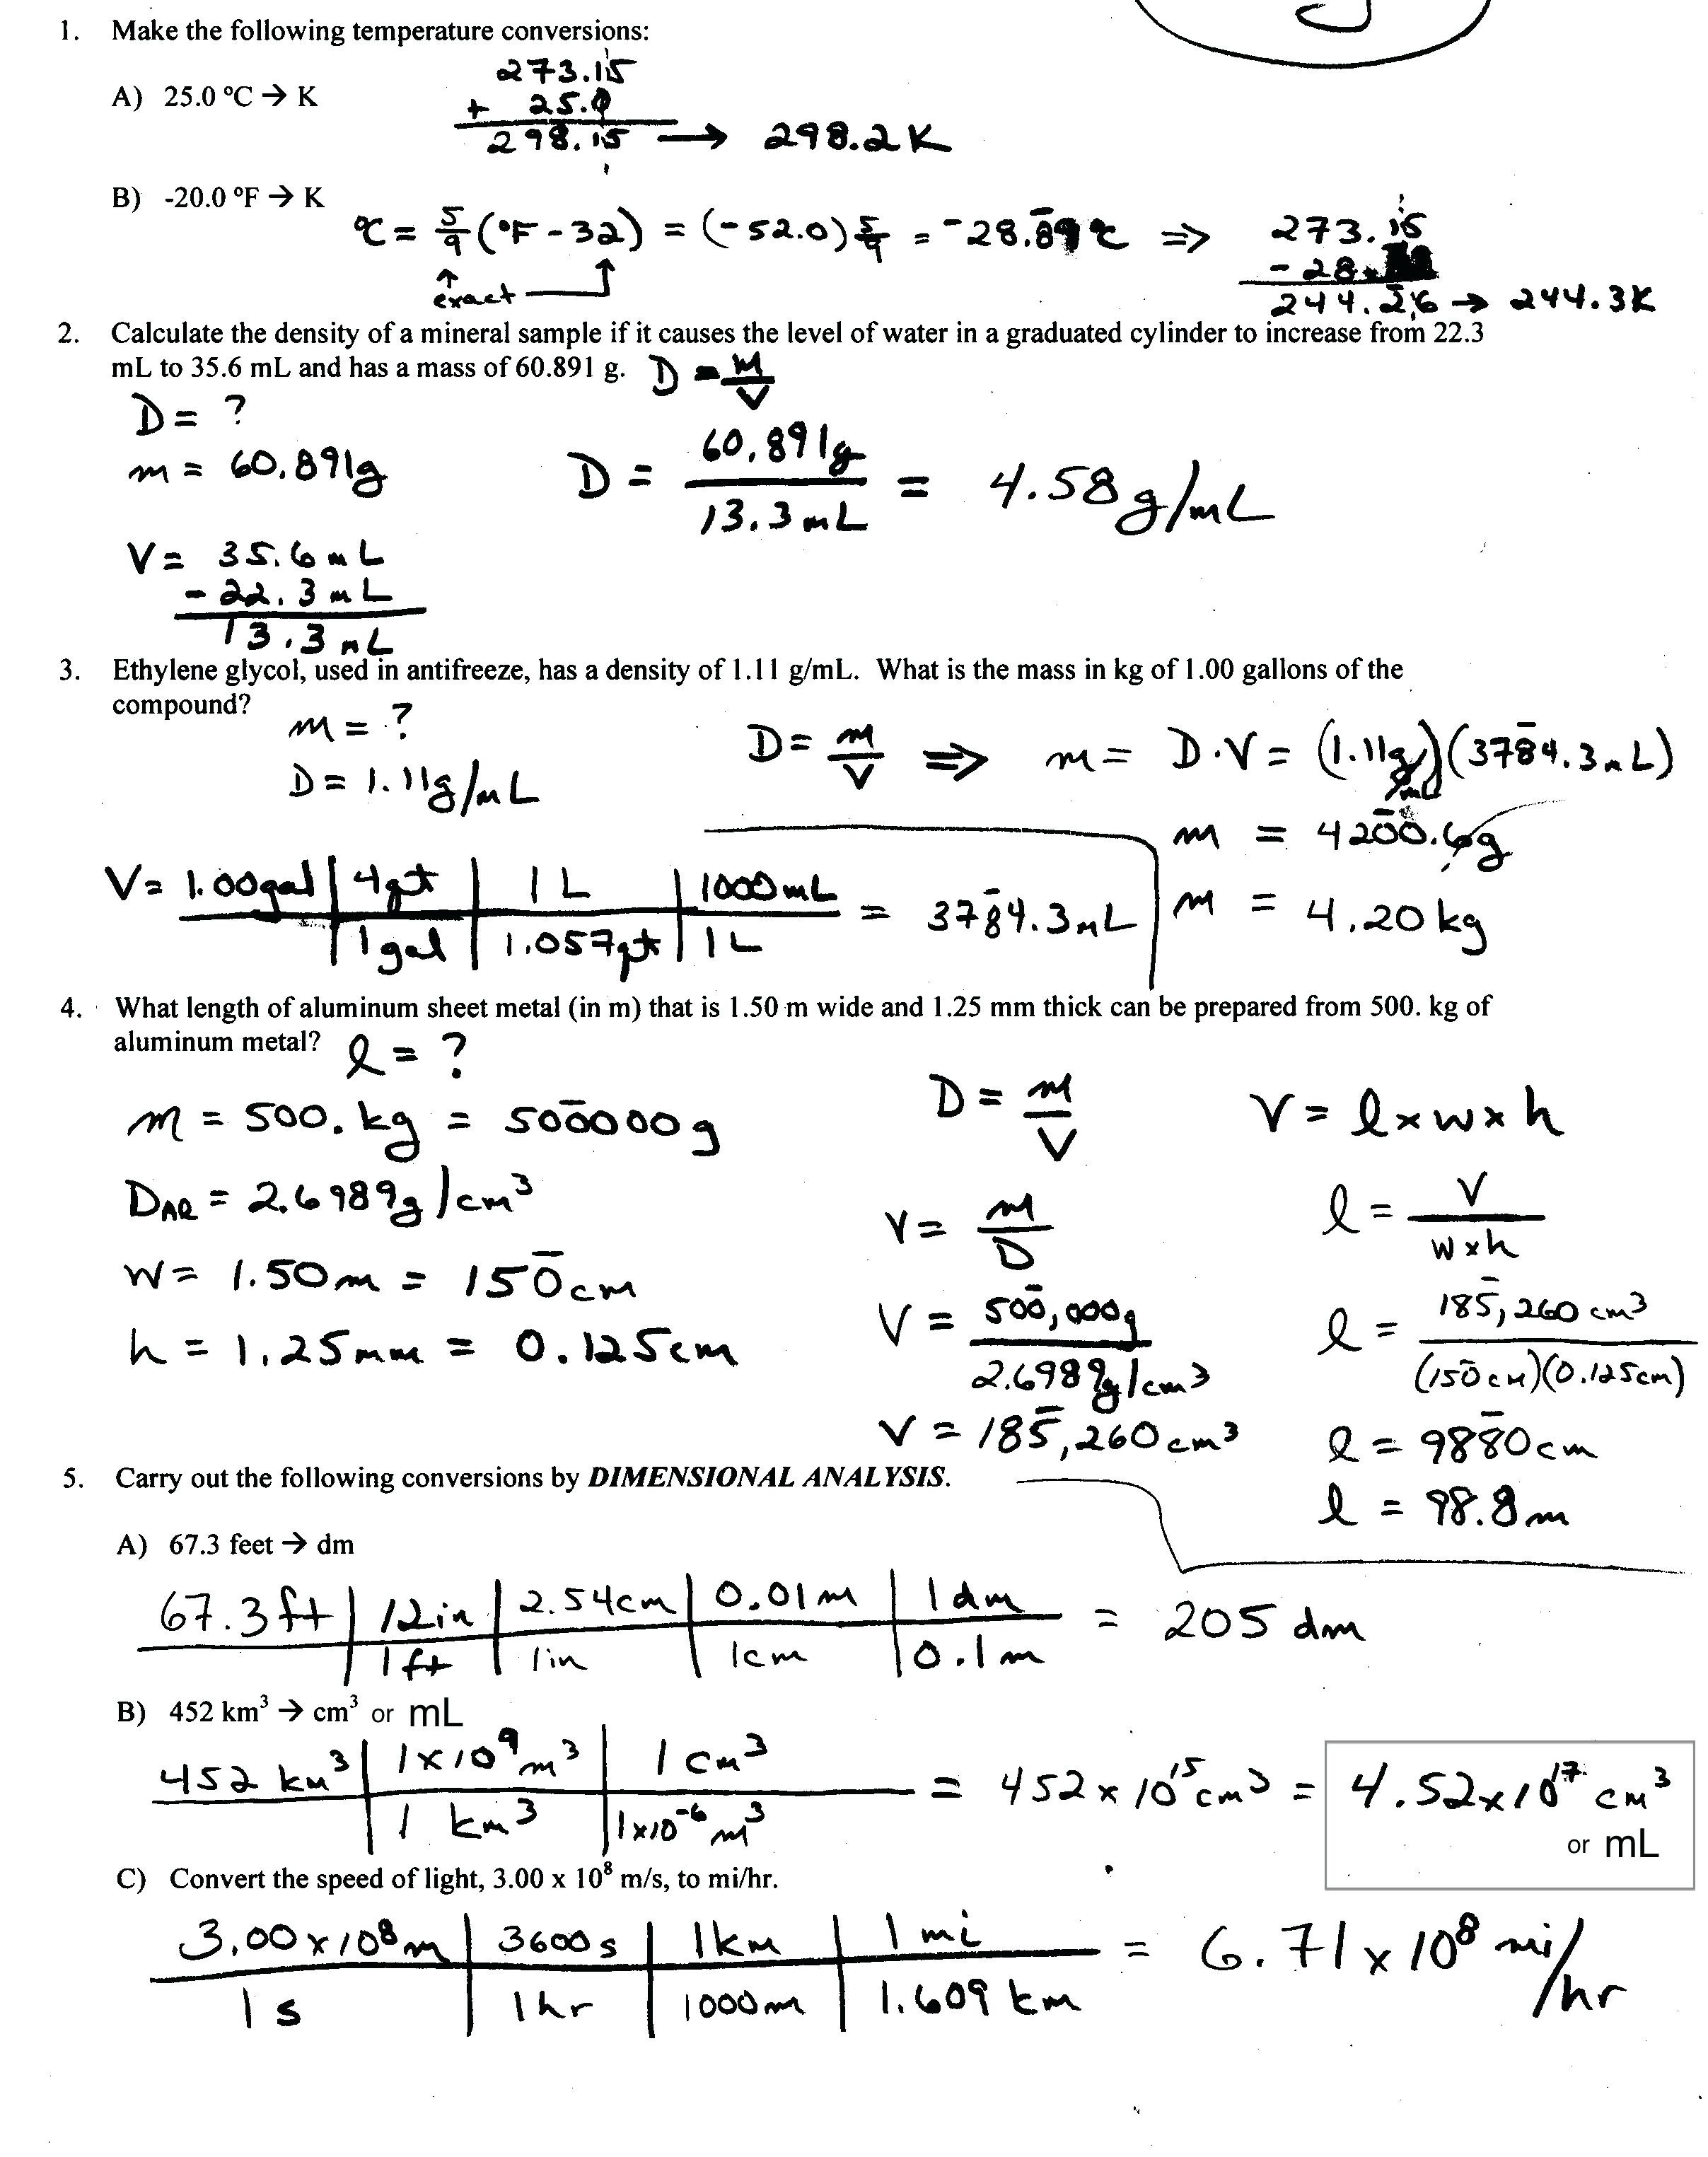 Scientific Notation Word Problems Worksheet Pdf | db-excel.com